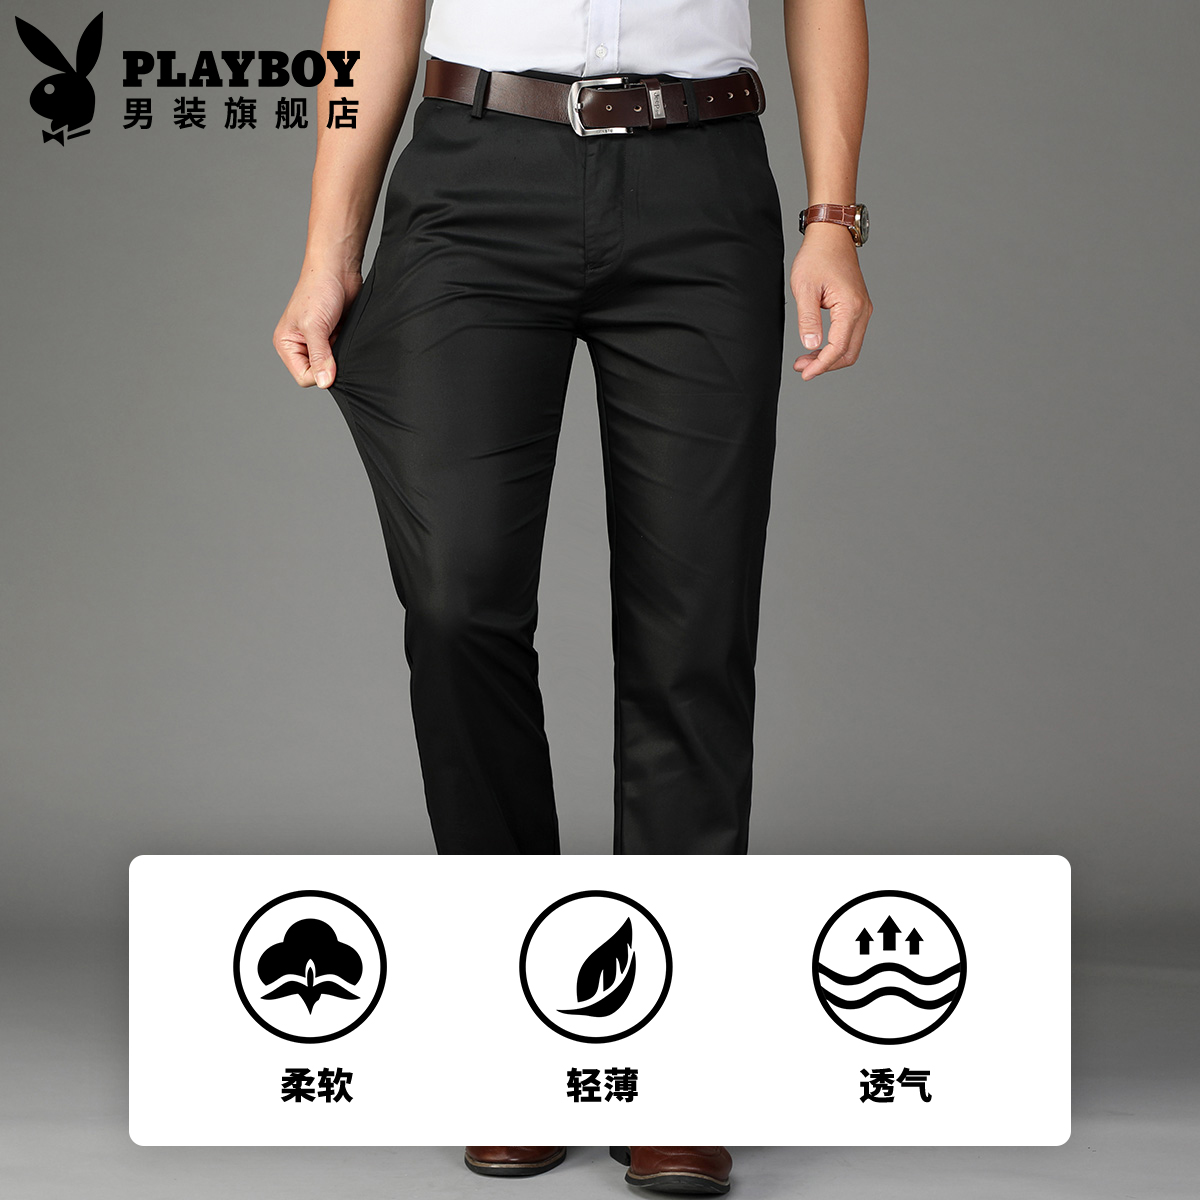 (Lessel) Playboy Casual kinh doanh quần mùa hè New Breathable Straight Pants Body Business Men